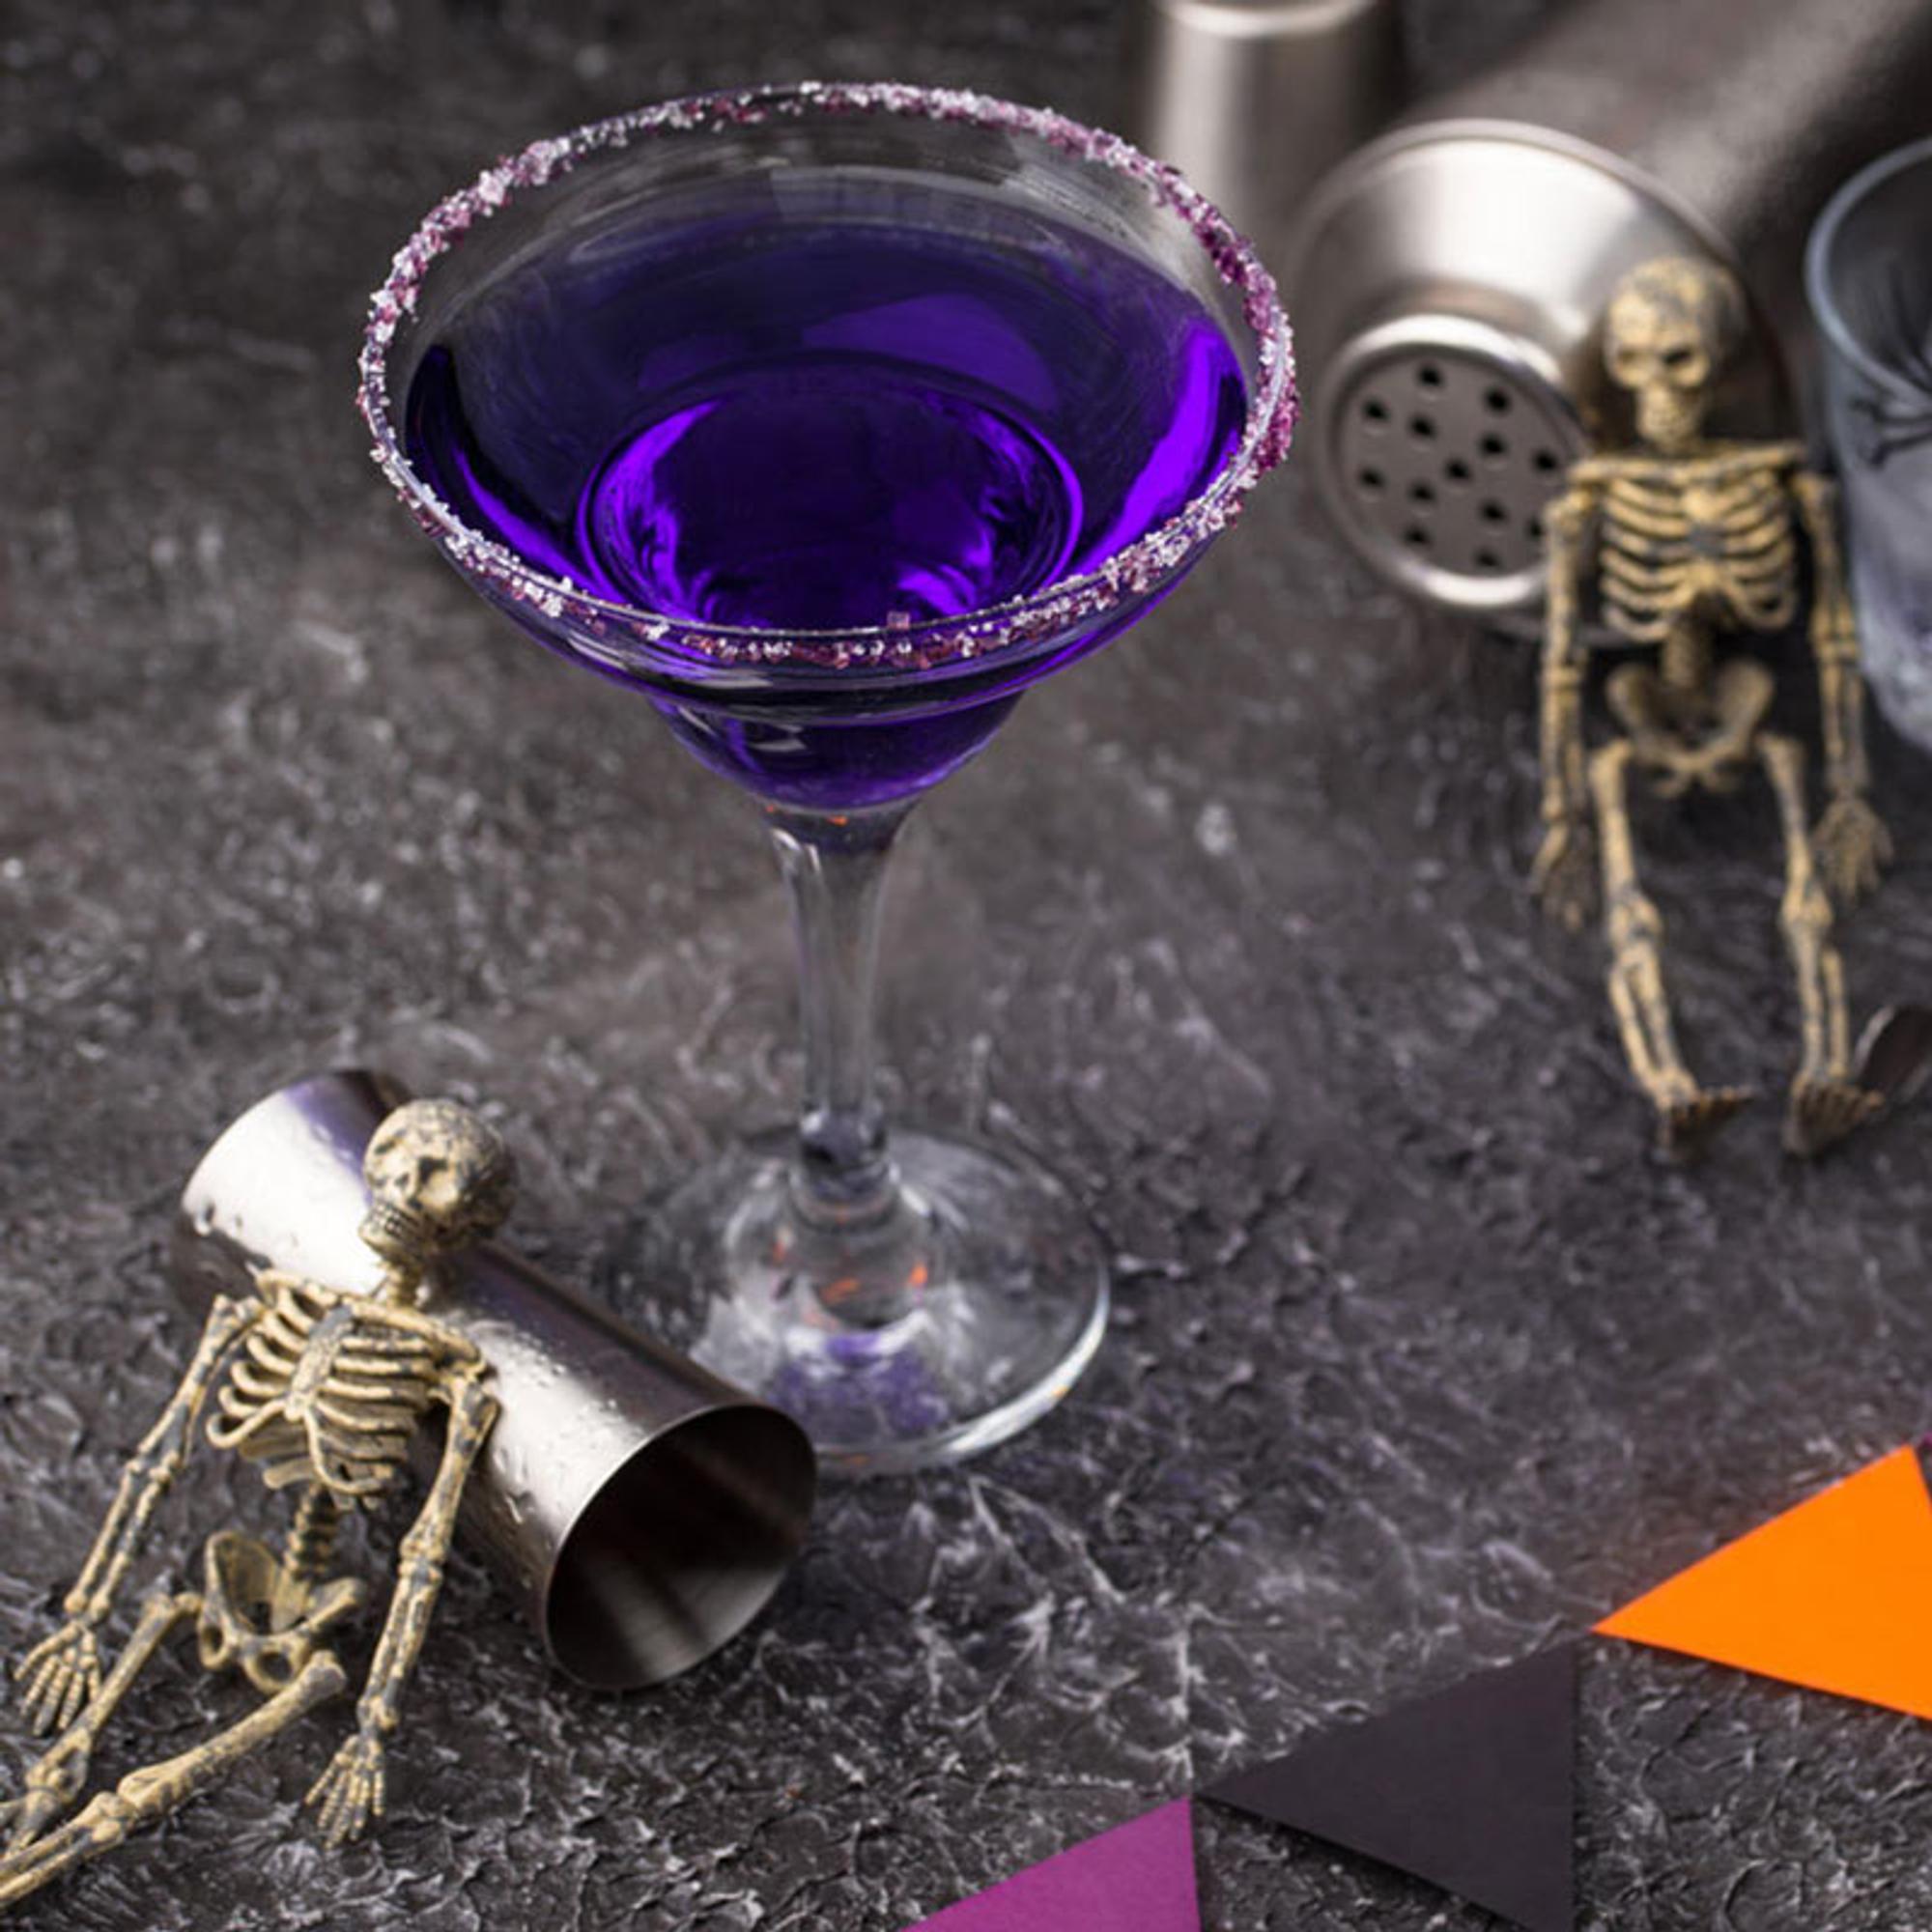 Halloween-Getränke: Der lila Monster-Drink